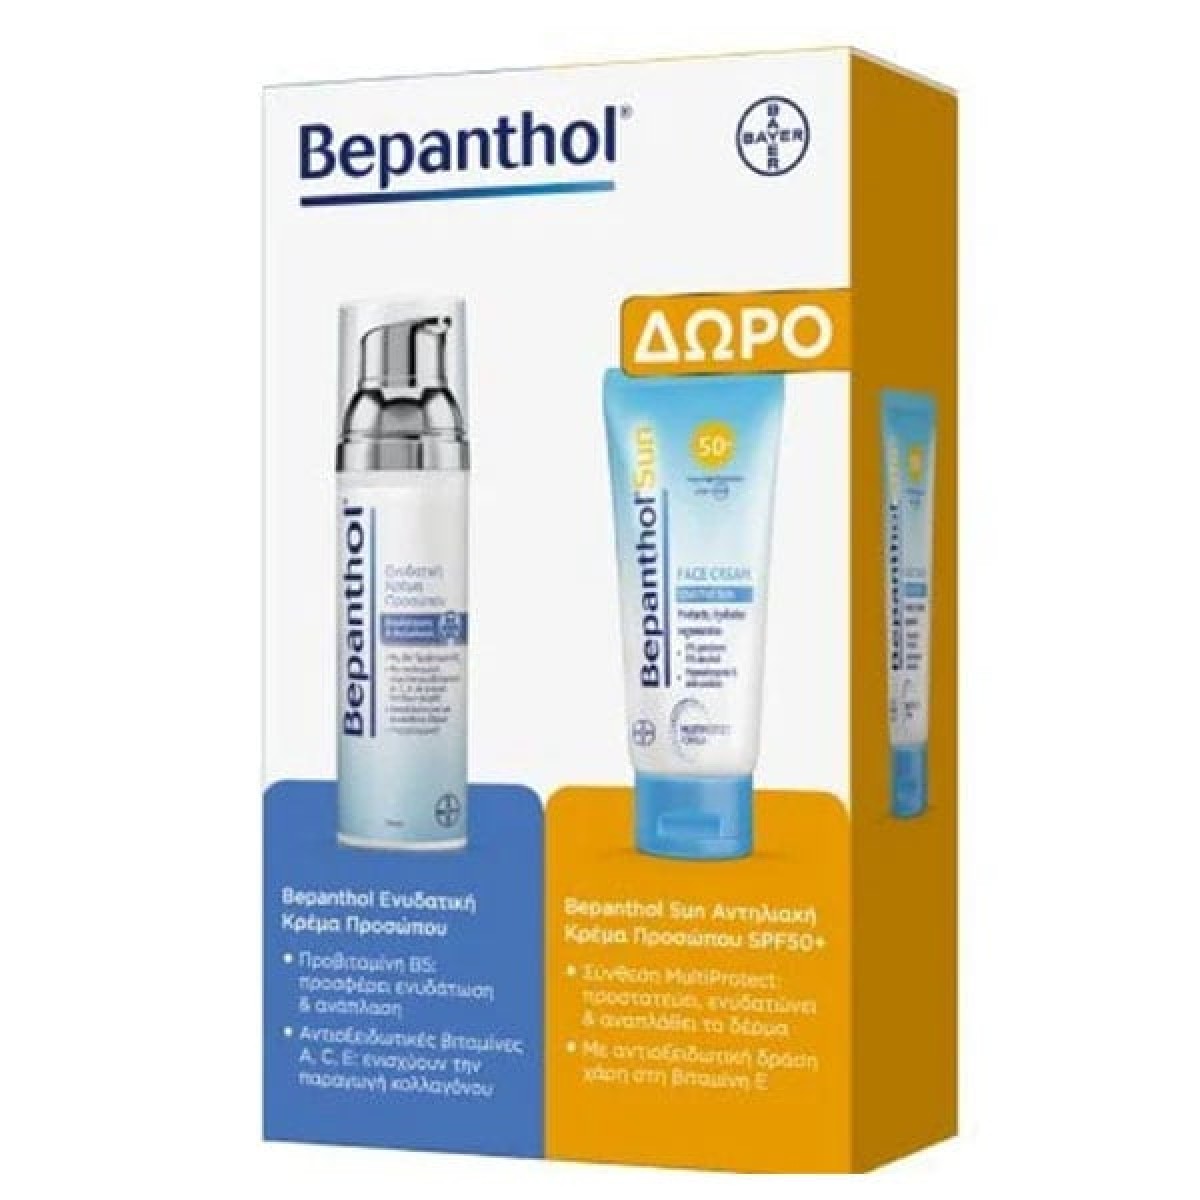 Bepanthol  | Ενυδατική Κρέμα Προσώπου 75ml  και  Αντηλιακή Κρέμα Προσώπου SPF50+ 50ml.